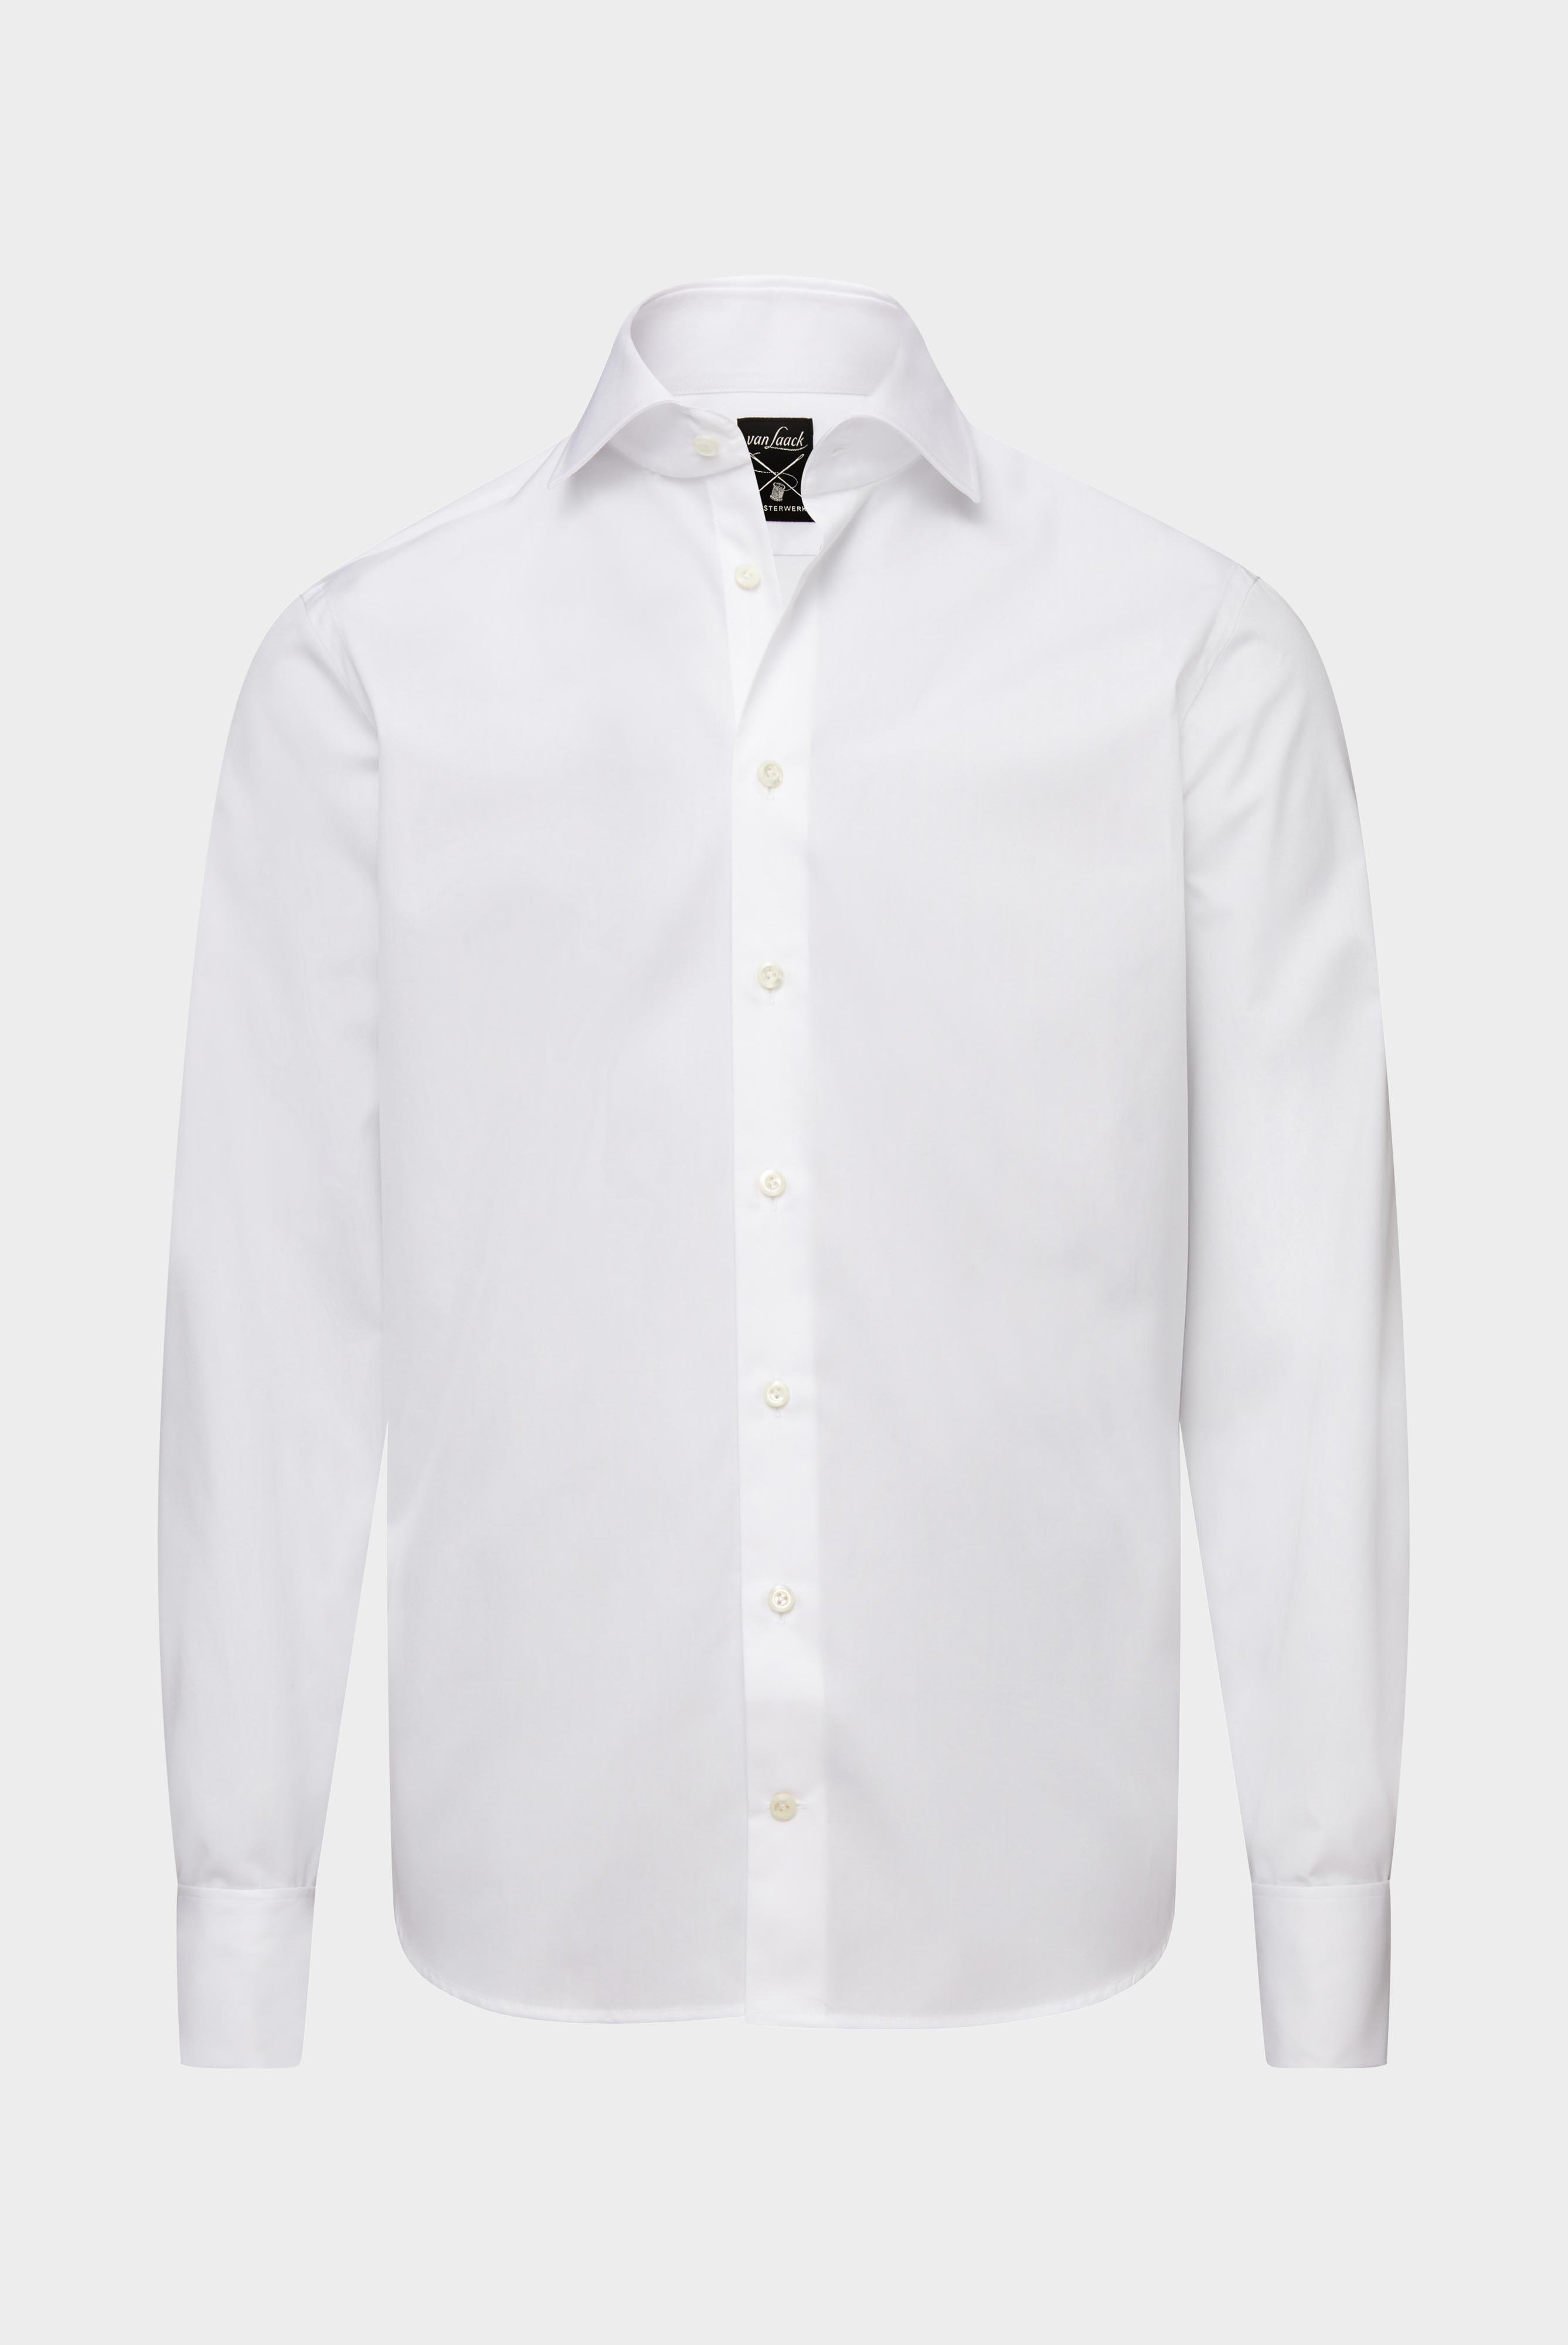 Business Shirts+Poplin Double Cuff Shirt+20.2042.AV.130648.000.37